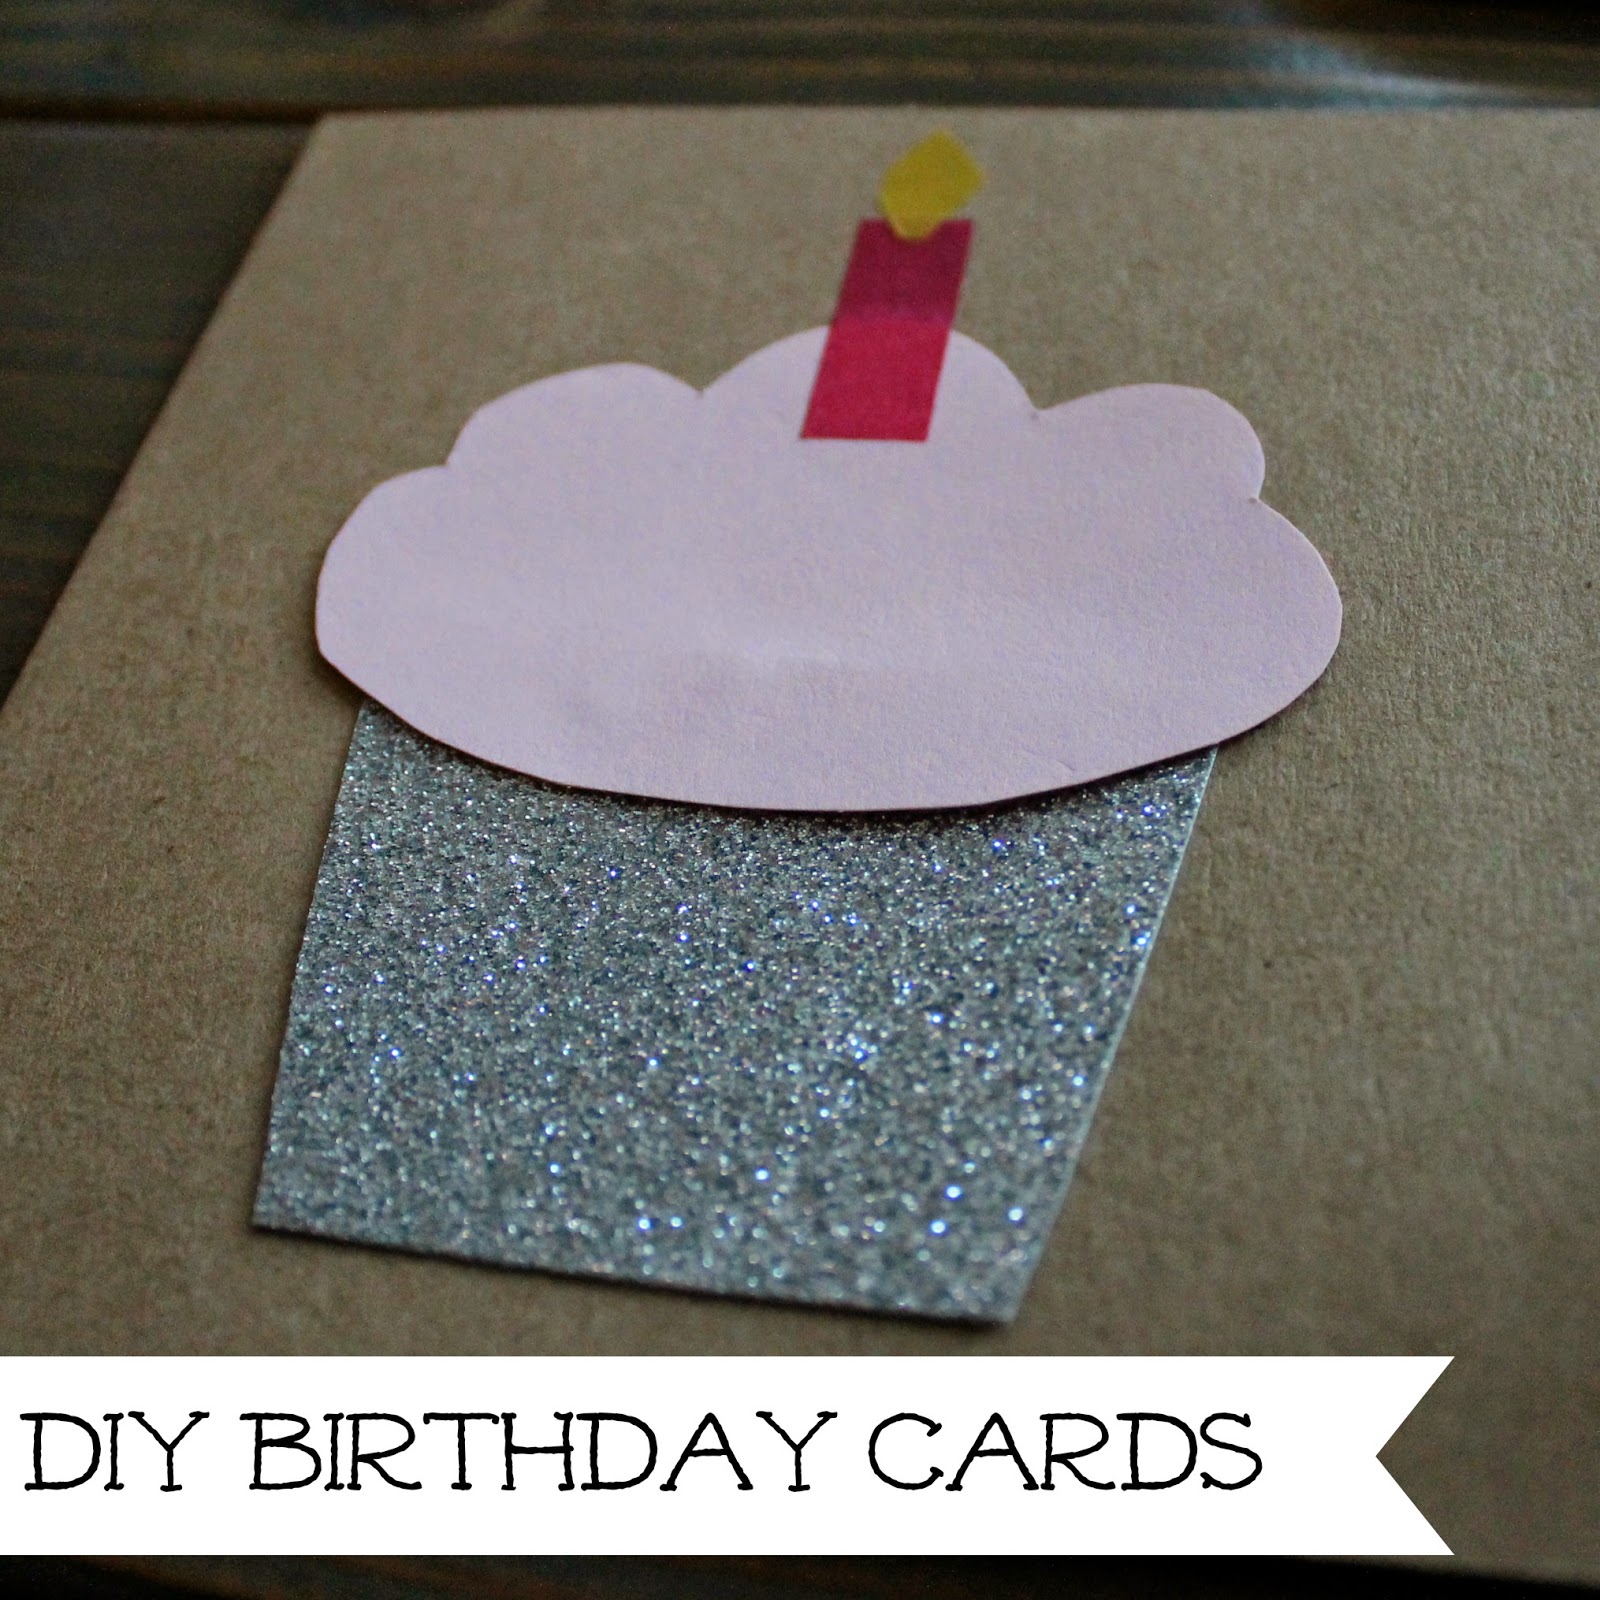 http://wonderfullymadebyleslie.blogspot.com/2014/01/diy-birthday-cards.html